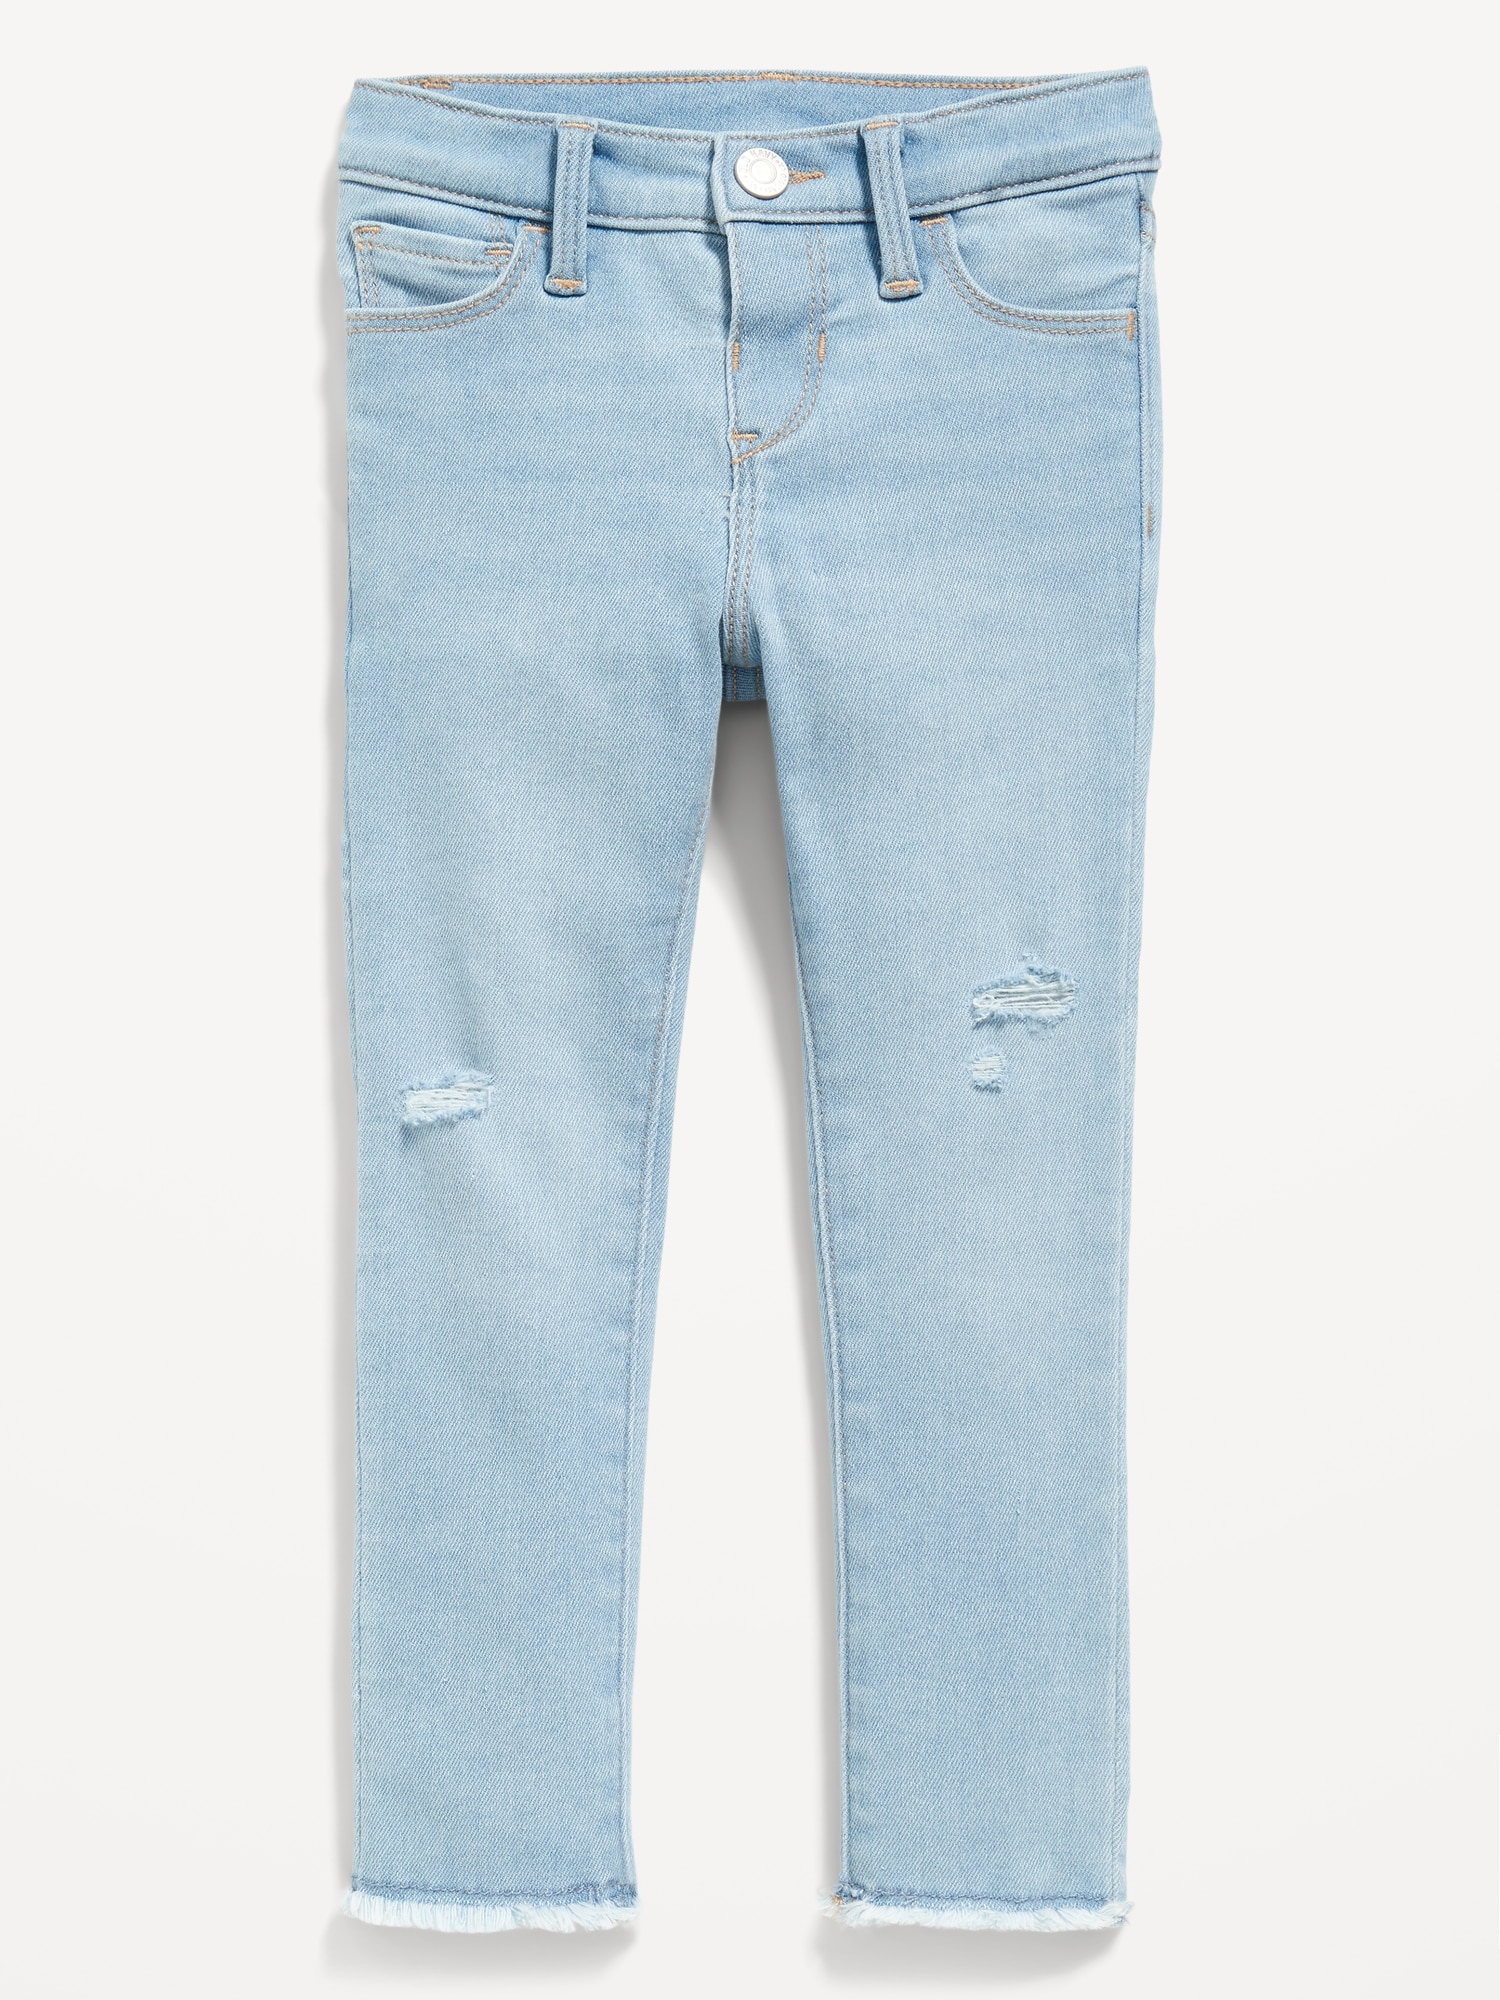 Ladies Plain Skinny Jeggings Coloured Denim Pants Stretch Jeans